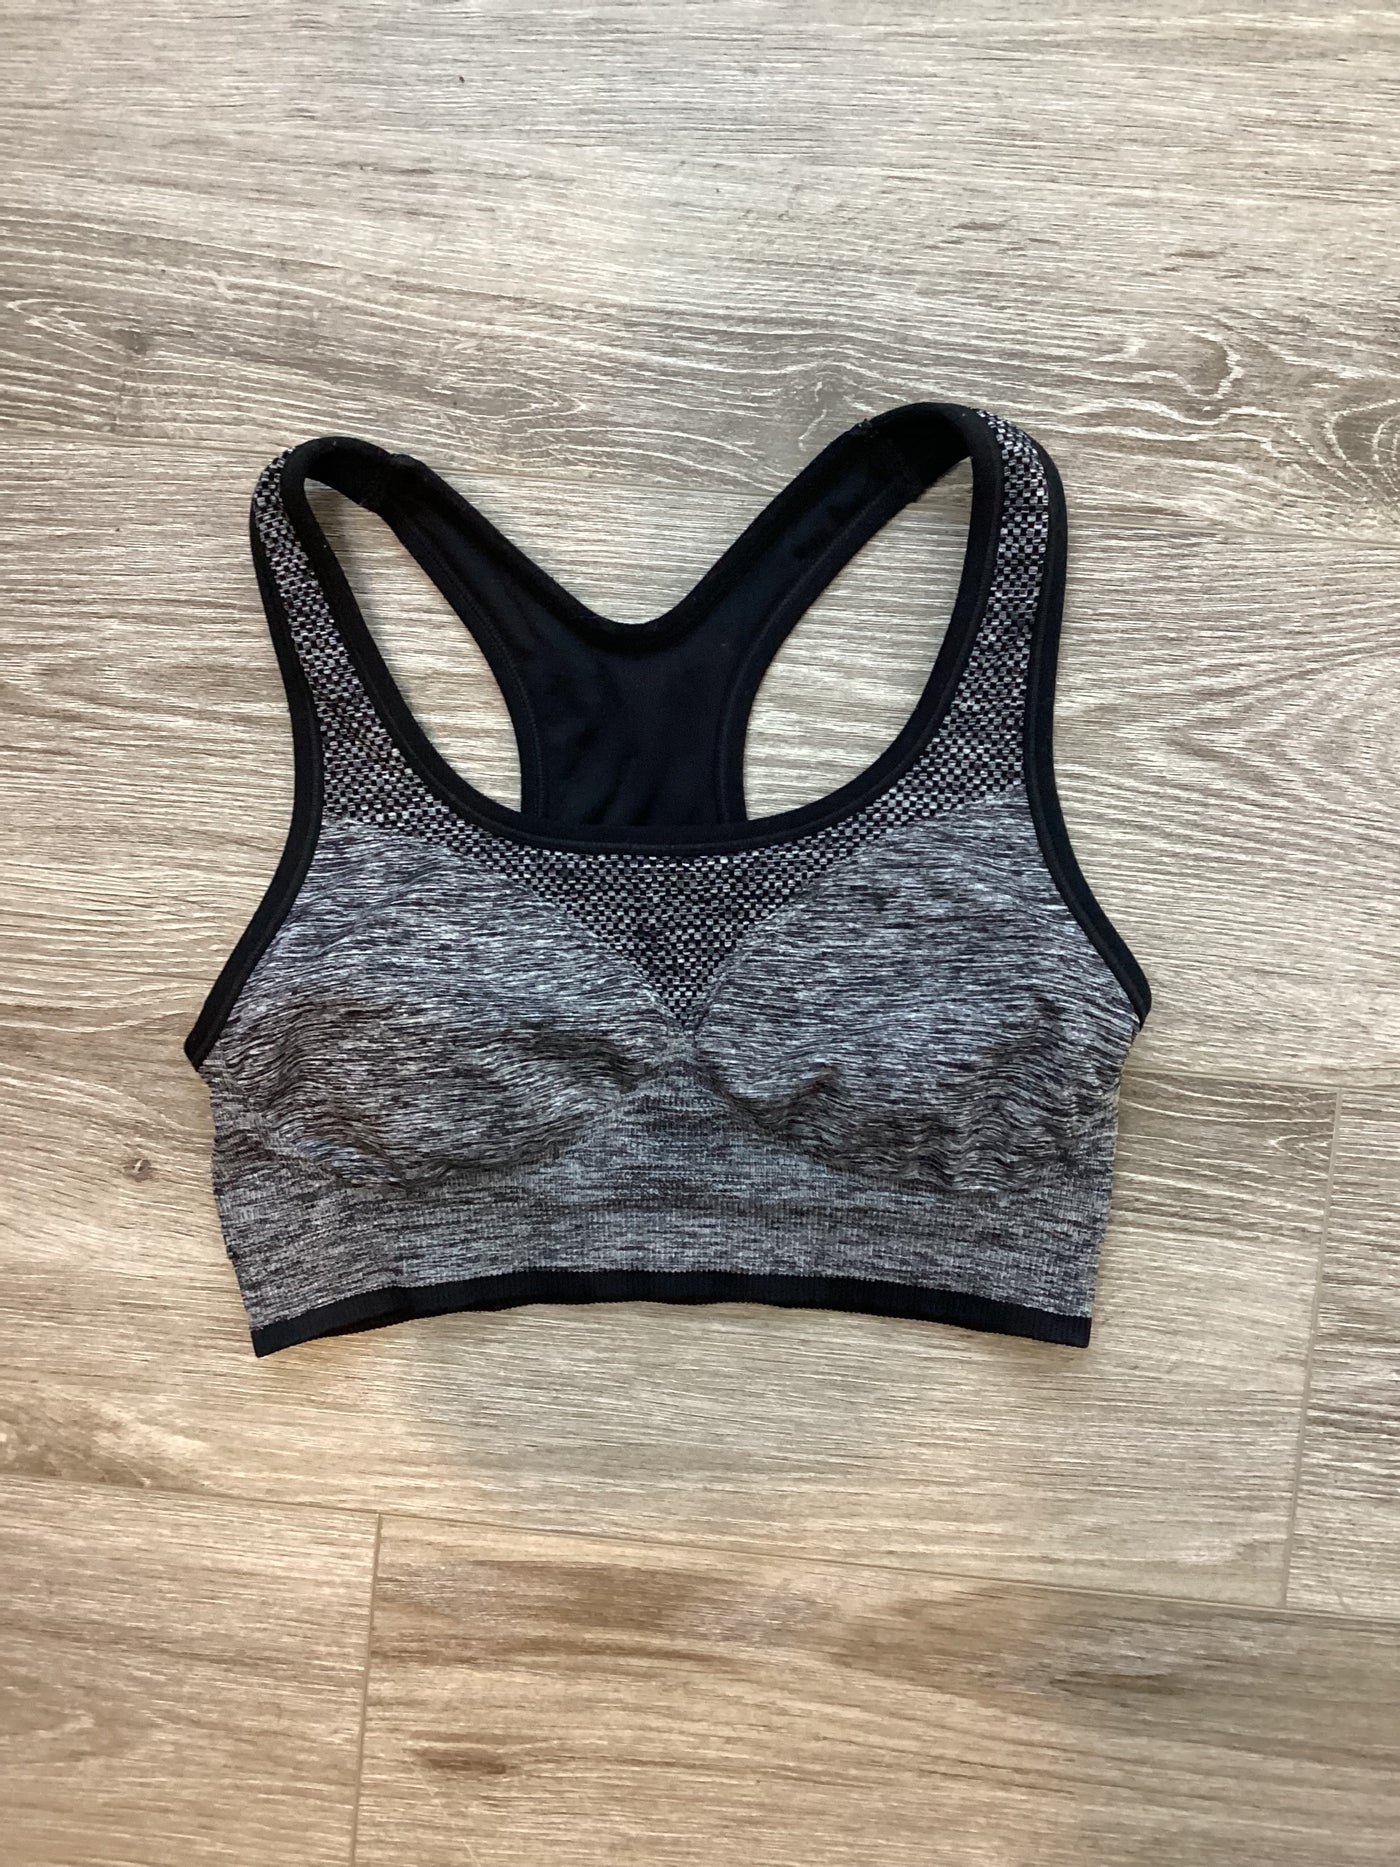 M&S black & grey crop top bra - Size M (Approx UK 10/12)